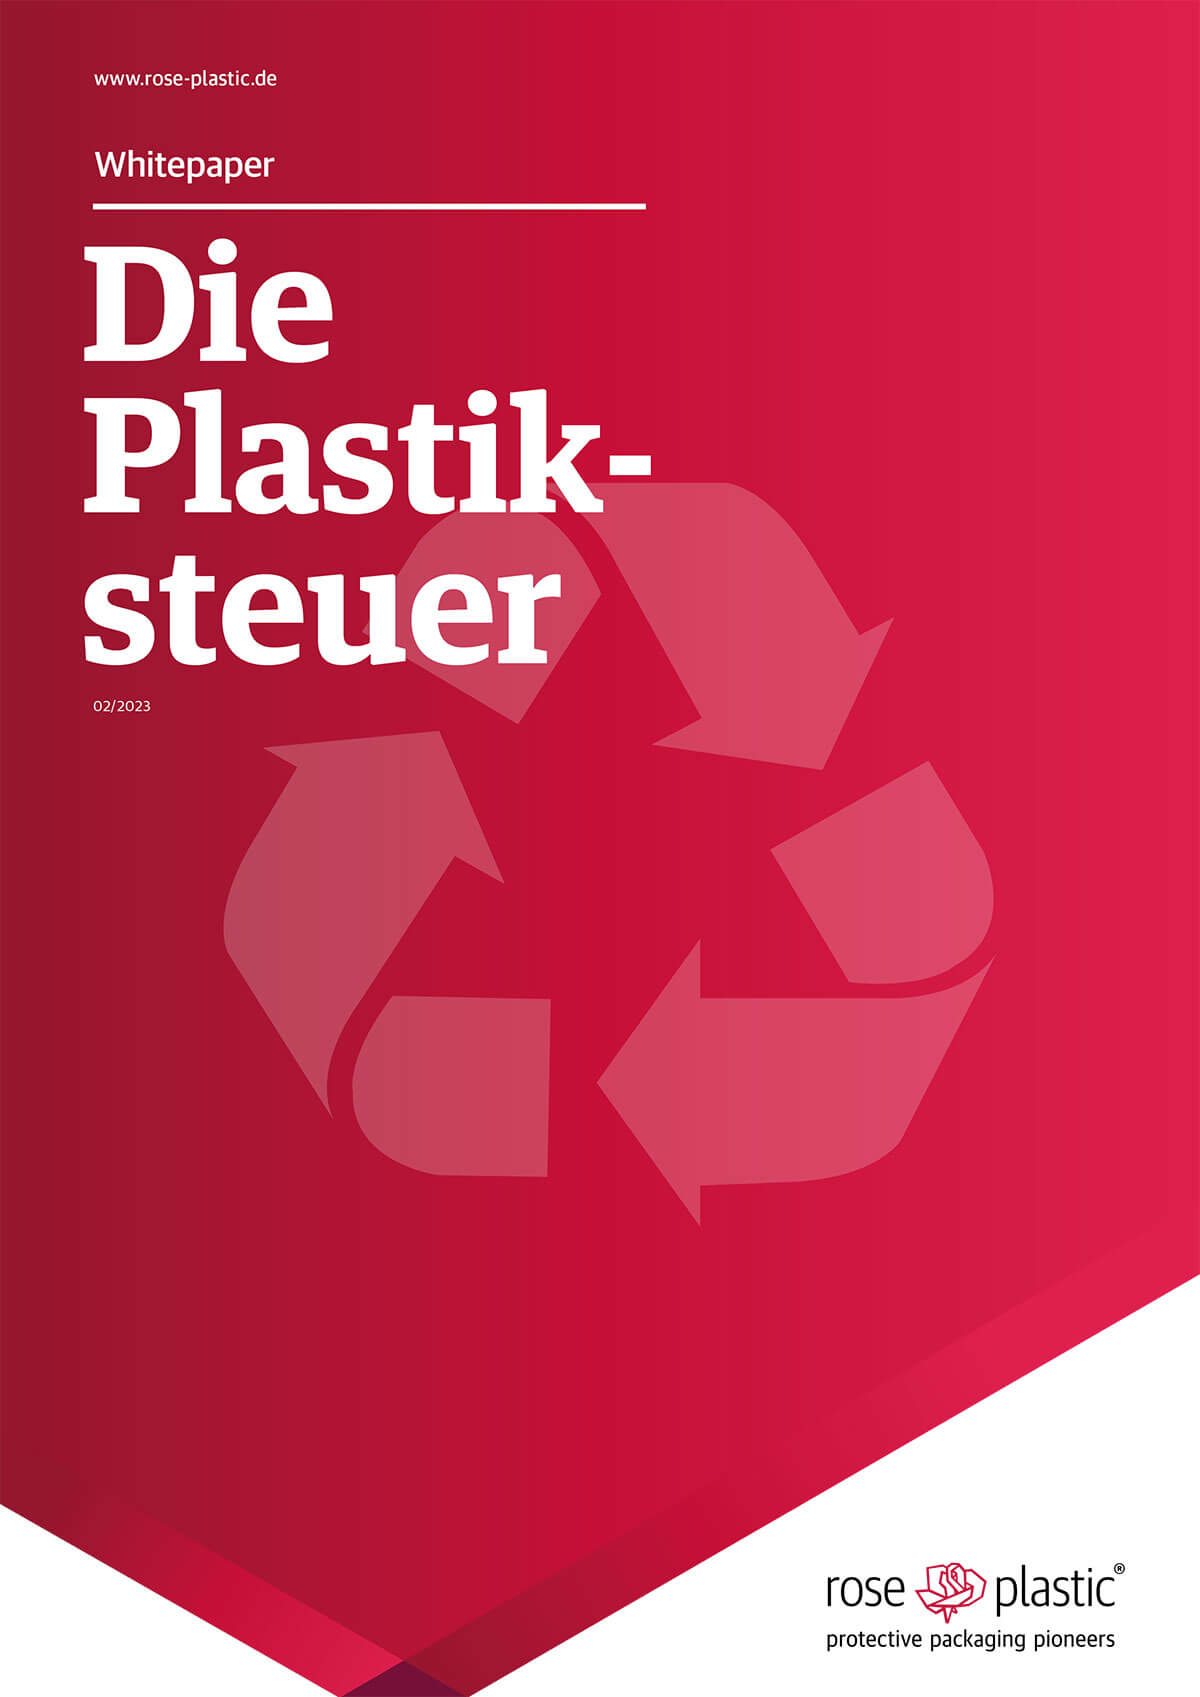 plastiksteuer whitepaper von rose plastic